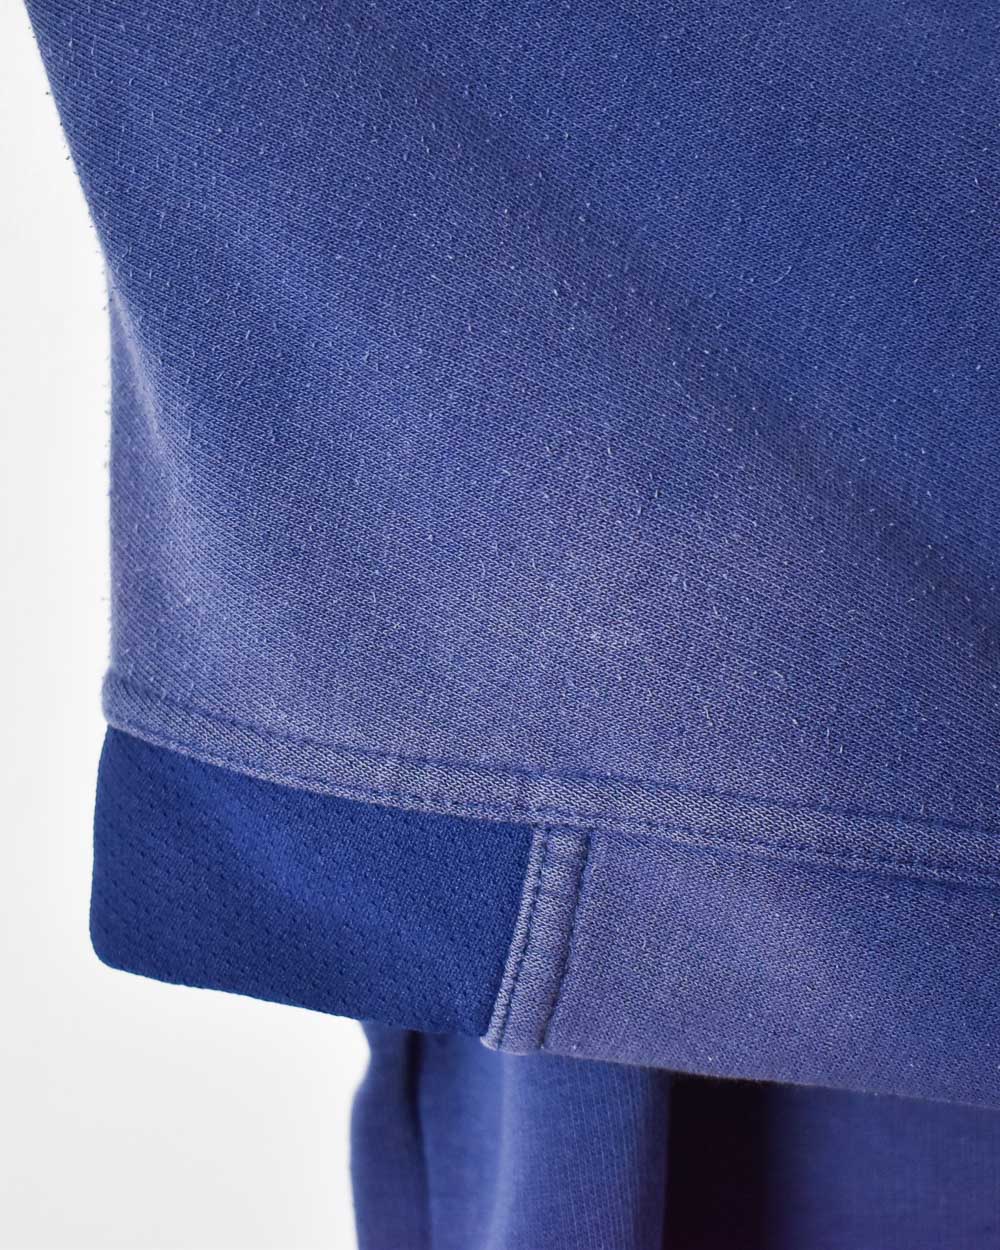 Navy Adidas Kangaroo Pocket 1/4 Zip Sweatshirt - Large